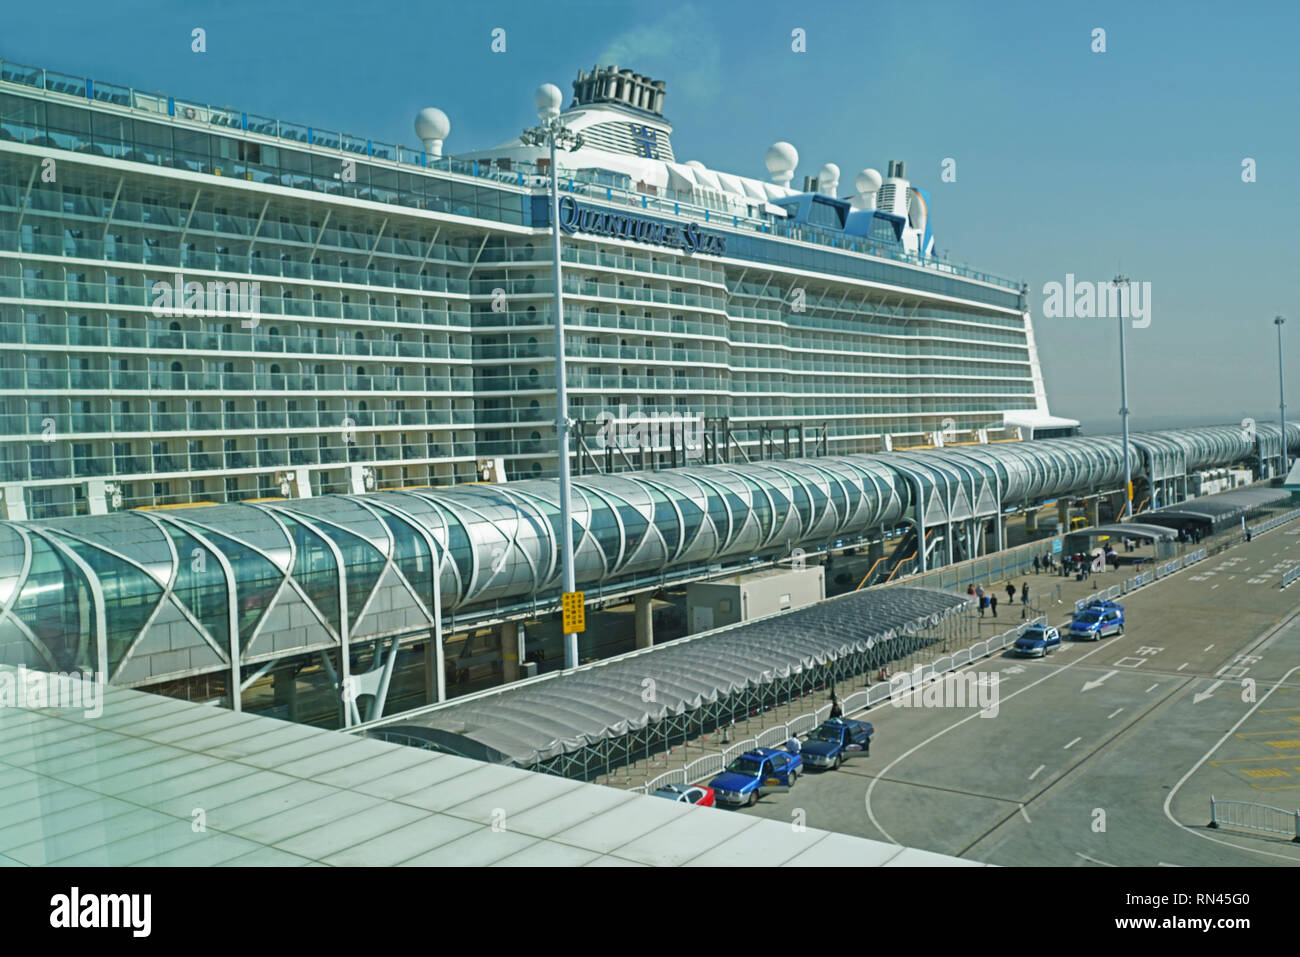 New Shanghai Baoshan Cruise Terminal with Royal Caribbean's mega cruise